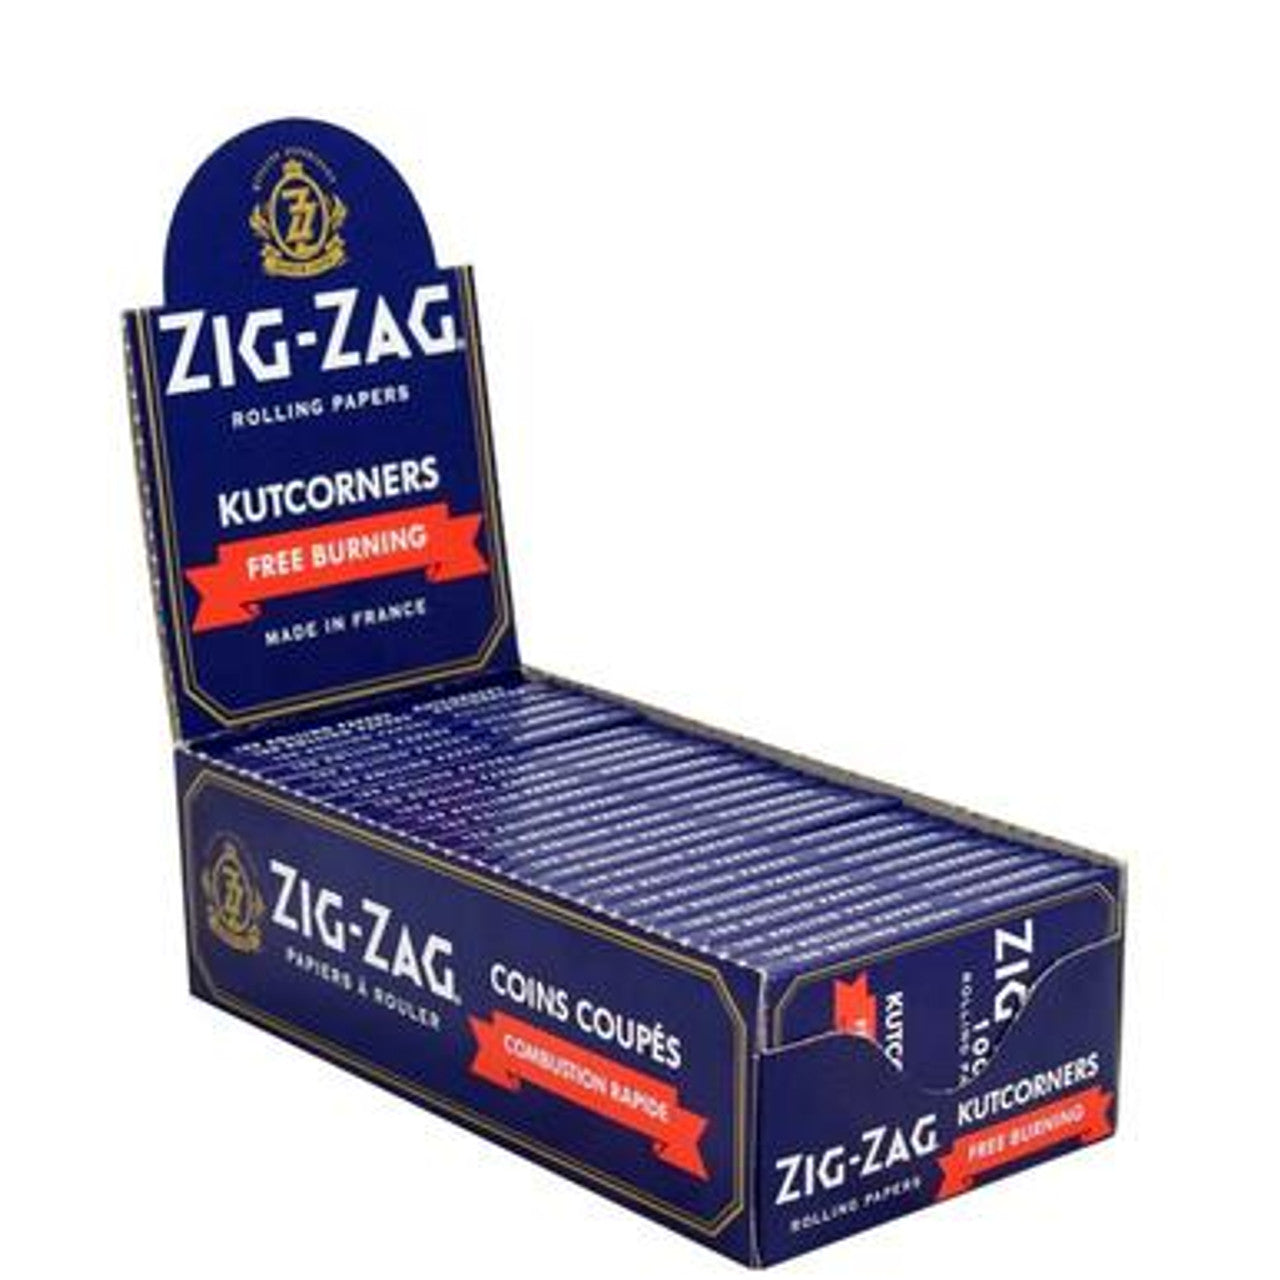 Zig Zag Kutcorners Gummed Papers - ULTIMATE - 24ct - BLUE